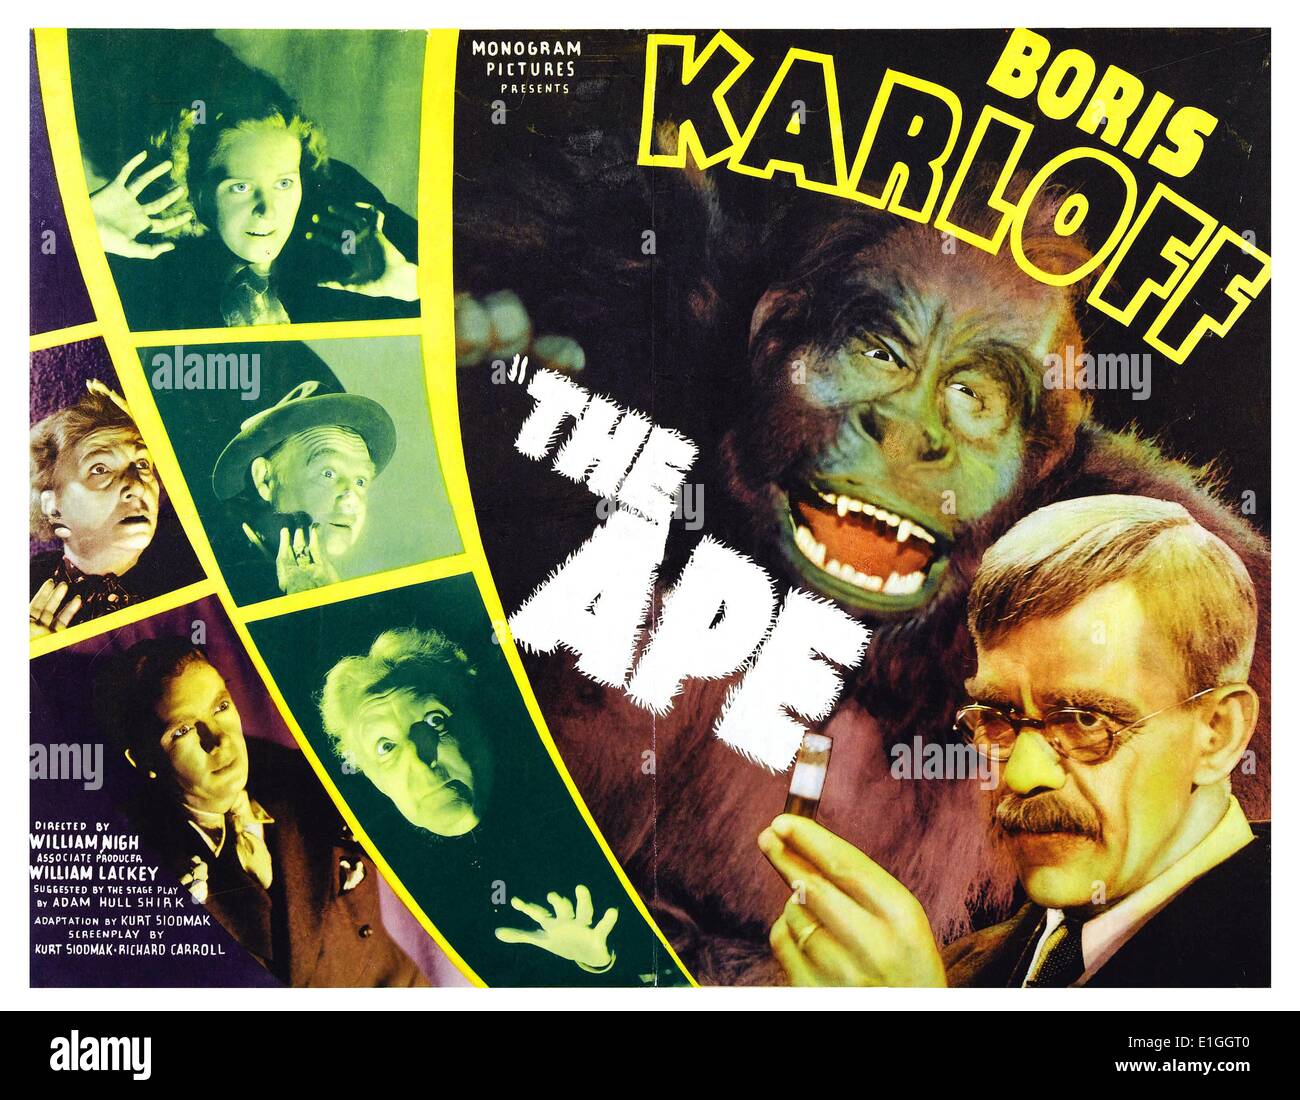 The Ape starring Boris Karloff was made in 1940. Stock Photo